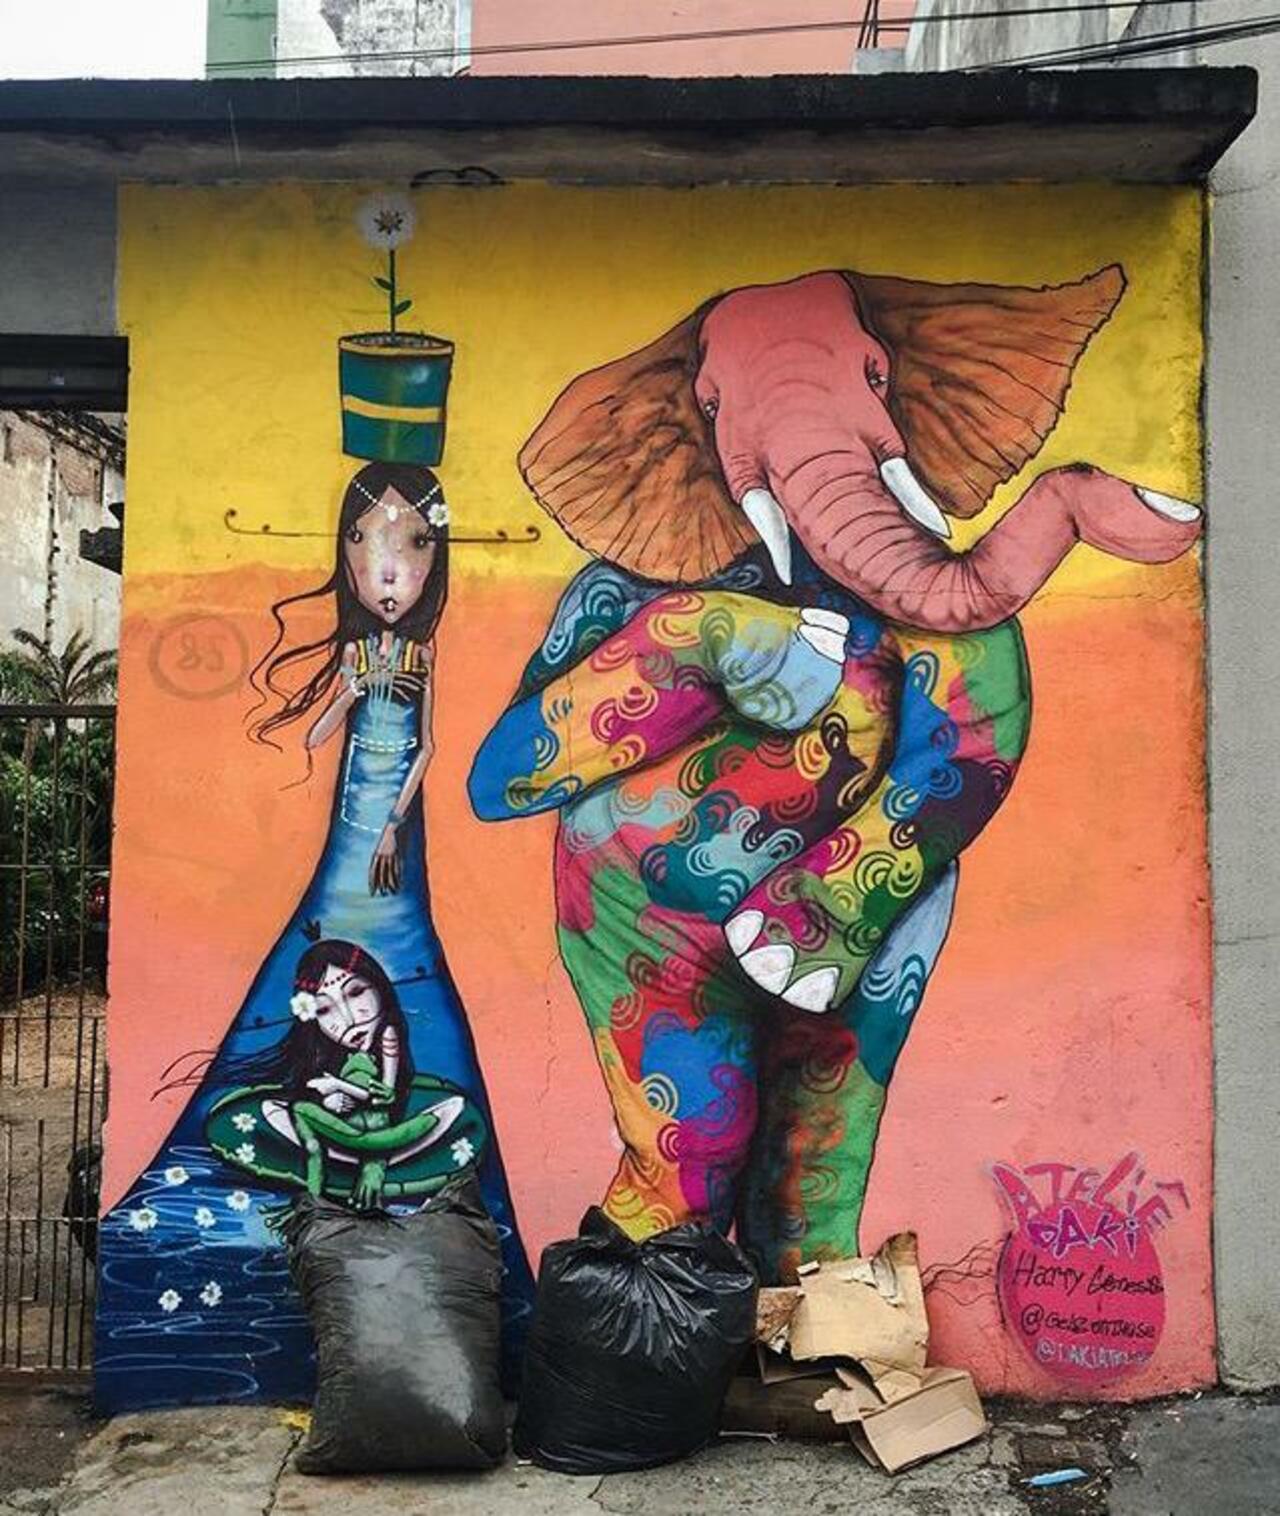 RT @aaahjoom: Street Art by Harry Geneis & Gelson in São Paulo 

#art #mural #graffiti #streetart http://t.co/LQYNHOhS4v